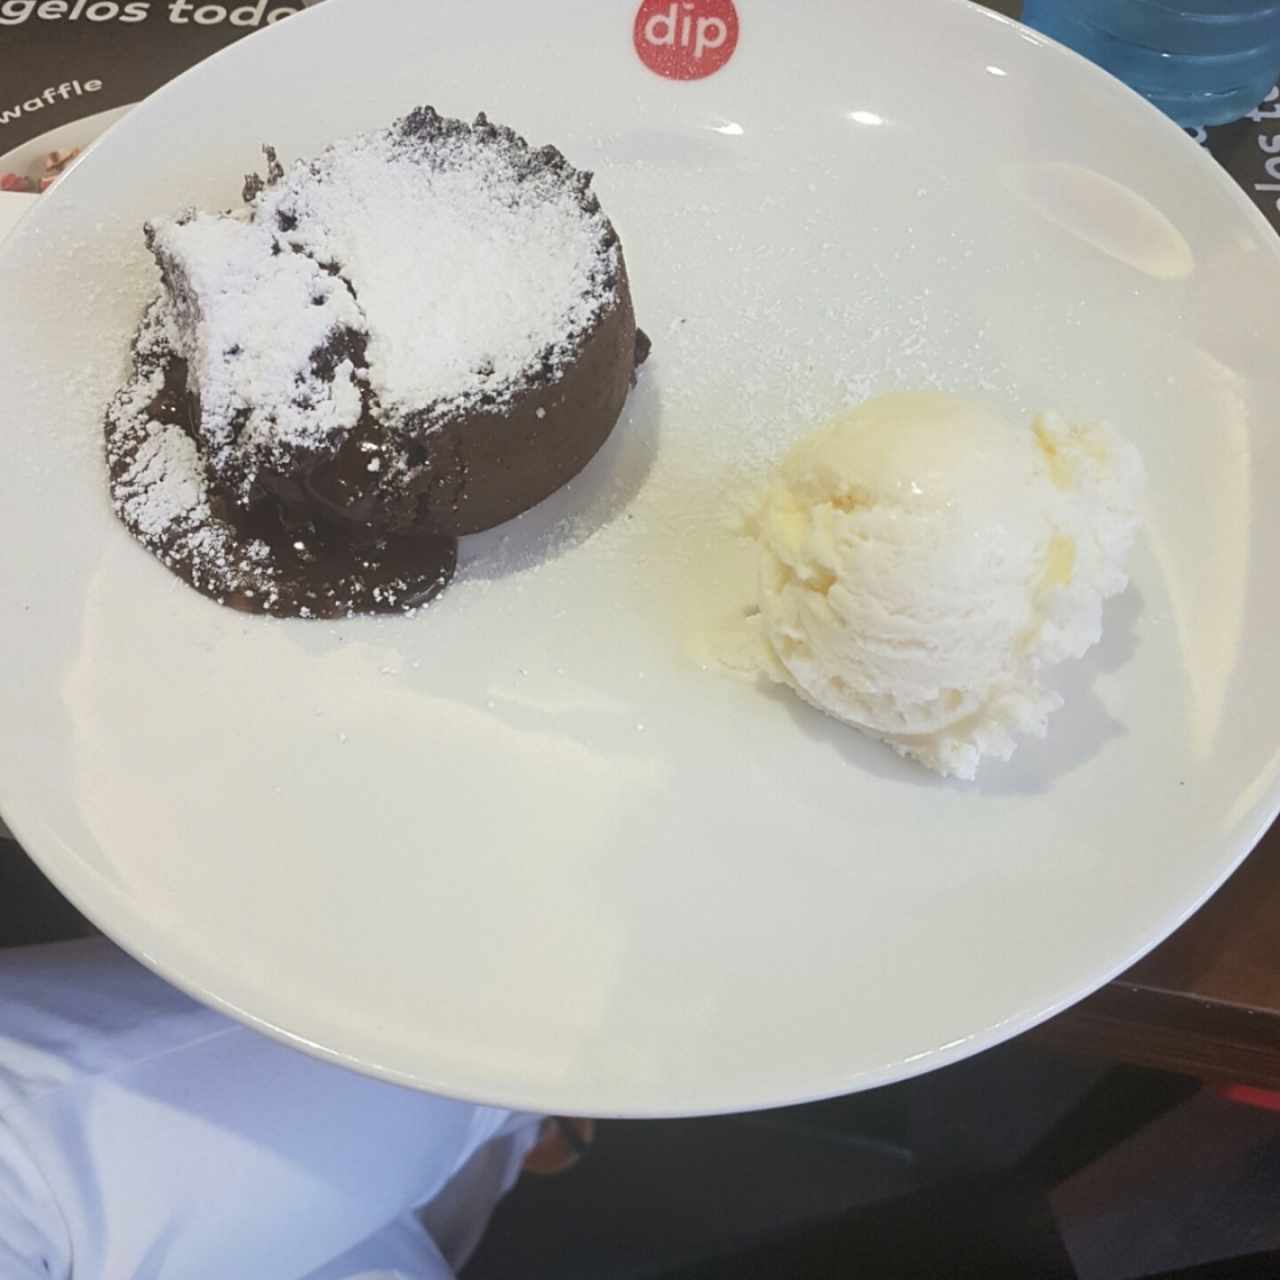 volcán de chocolate con helado